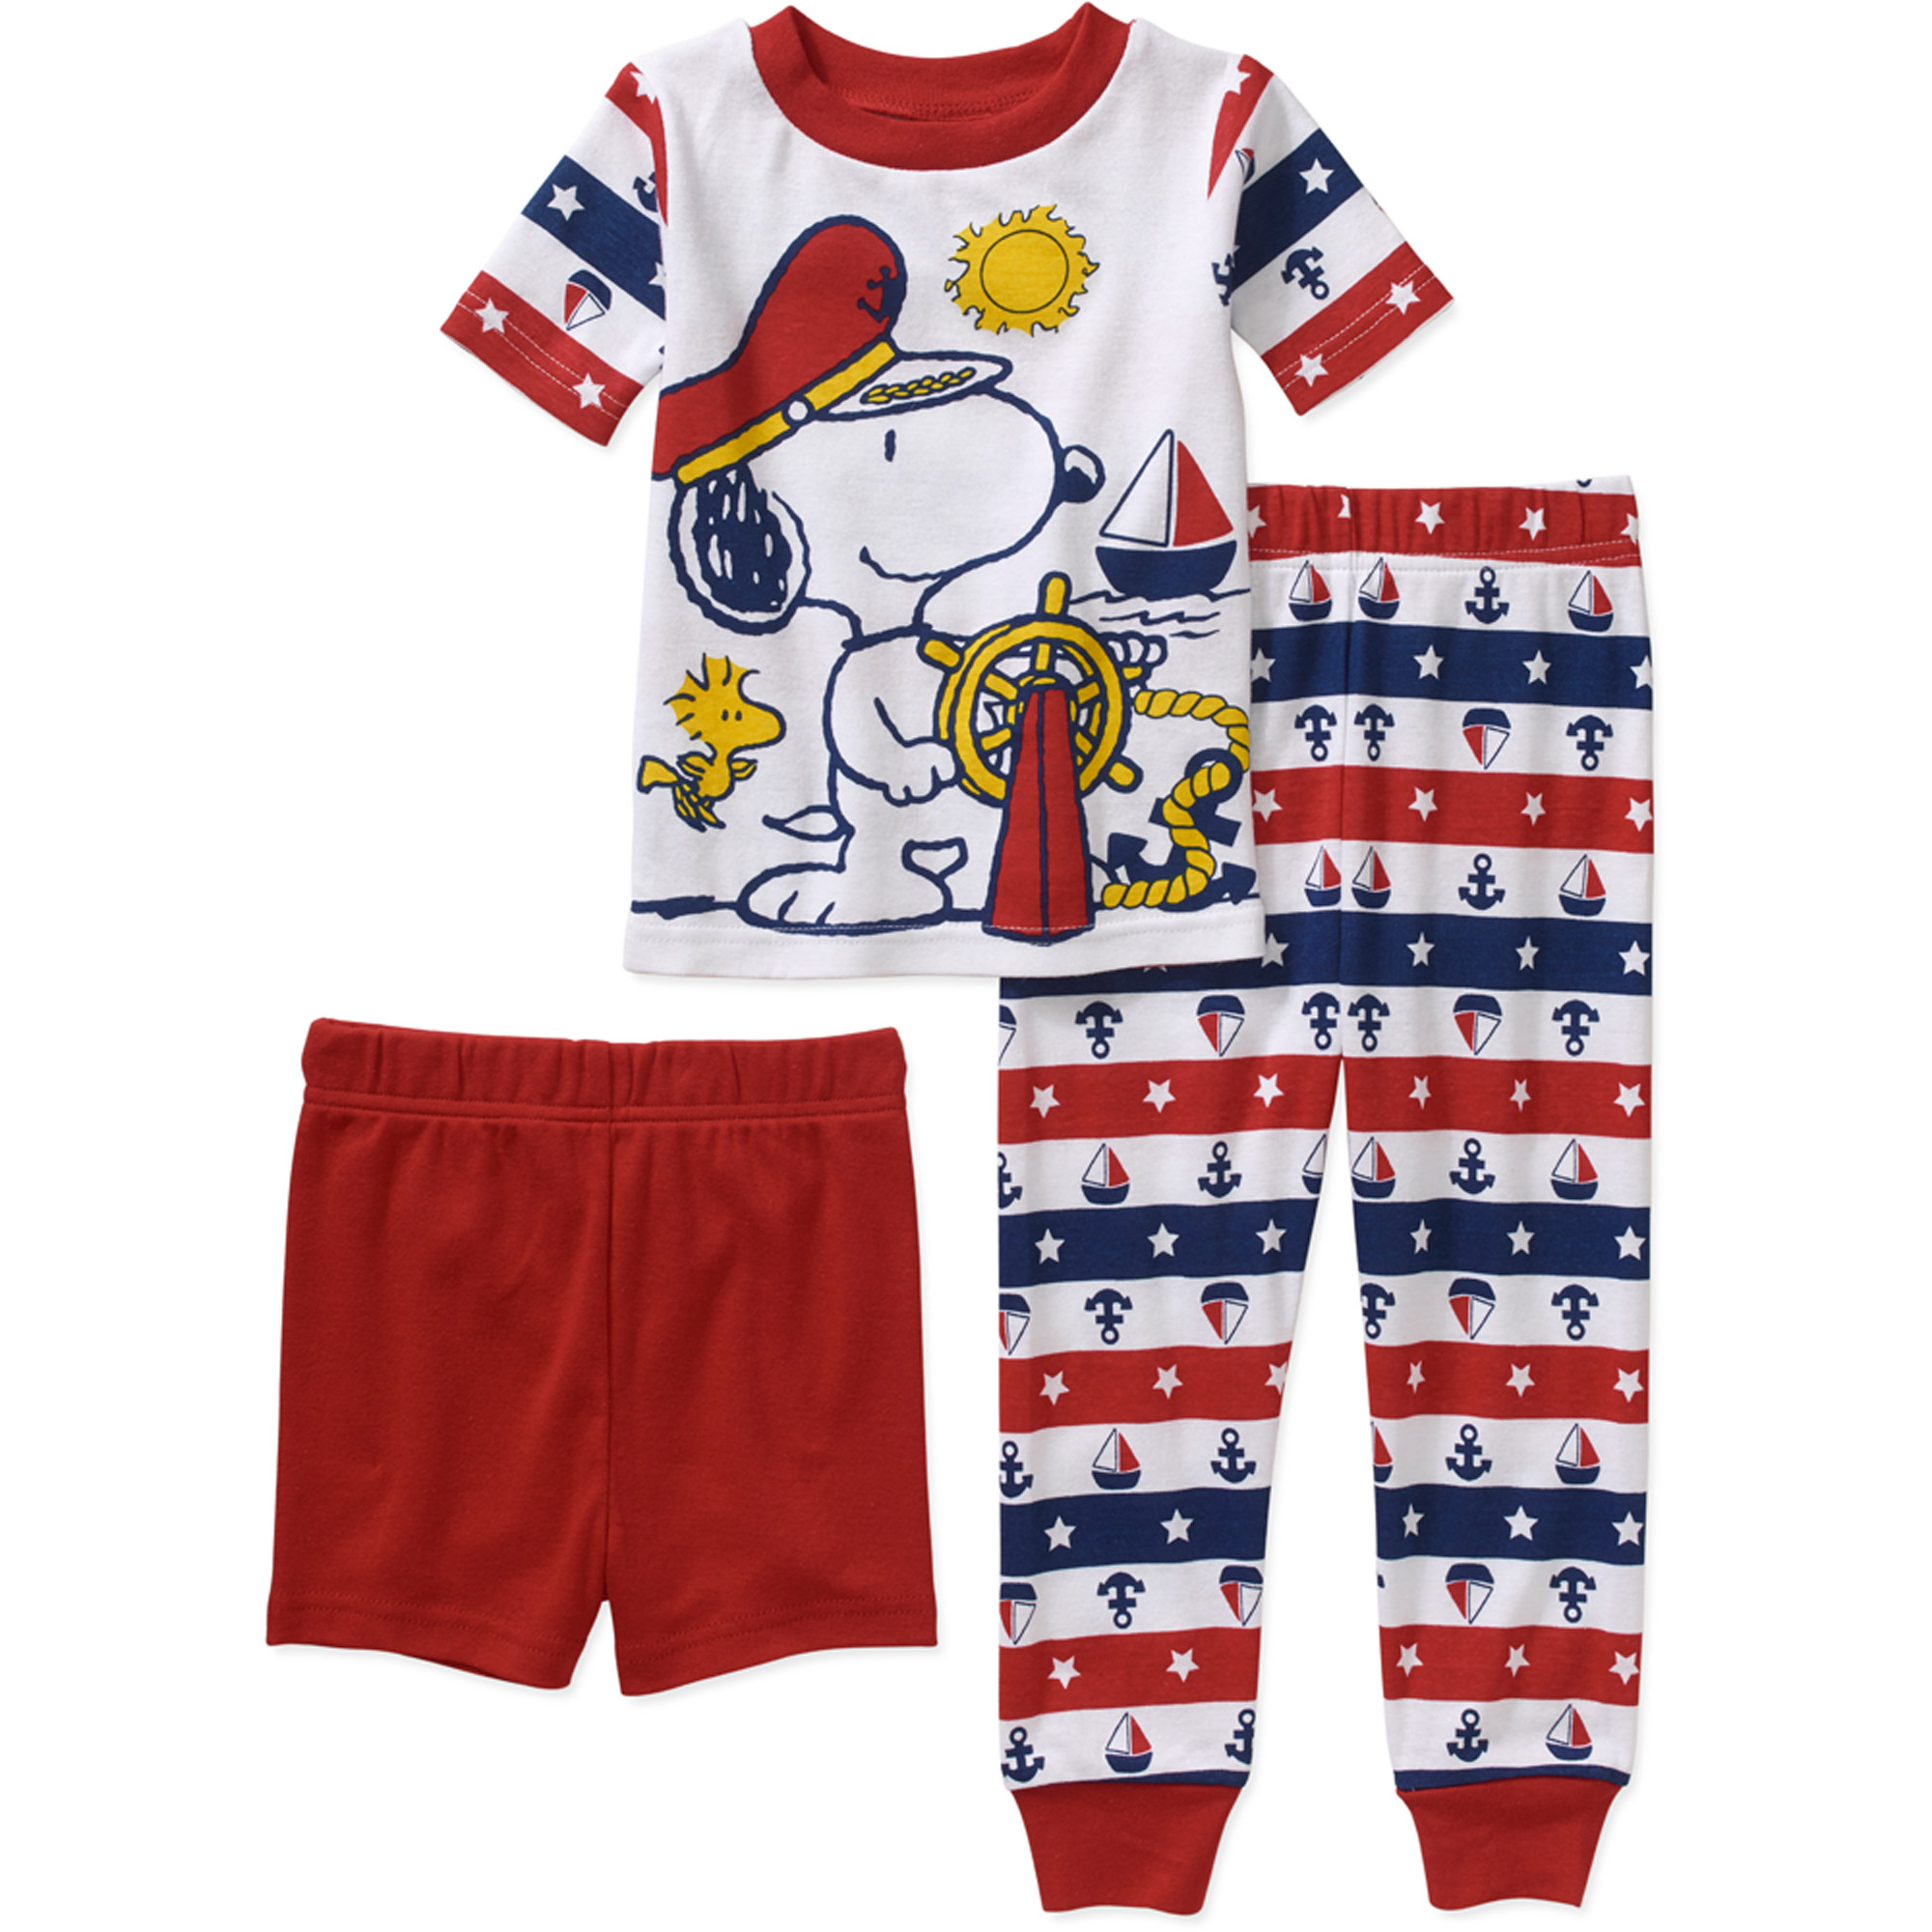 Snoopy Baby Toddler Boy 3-Piece Pajama Set - image 1 of 1